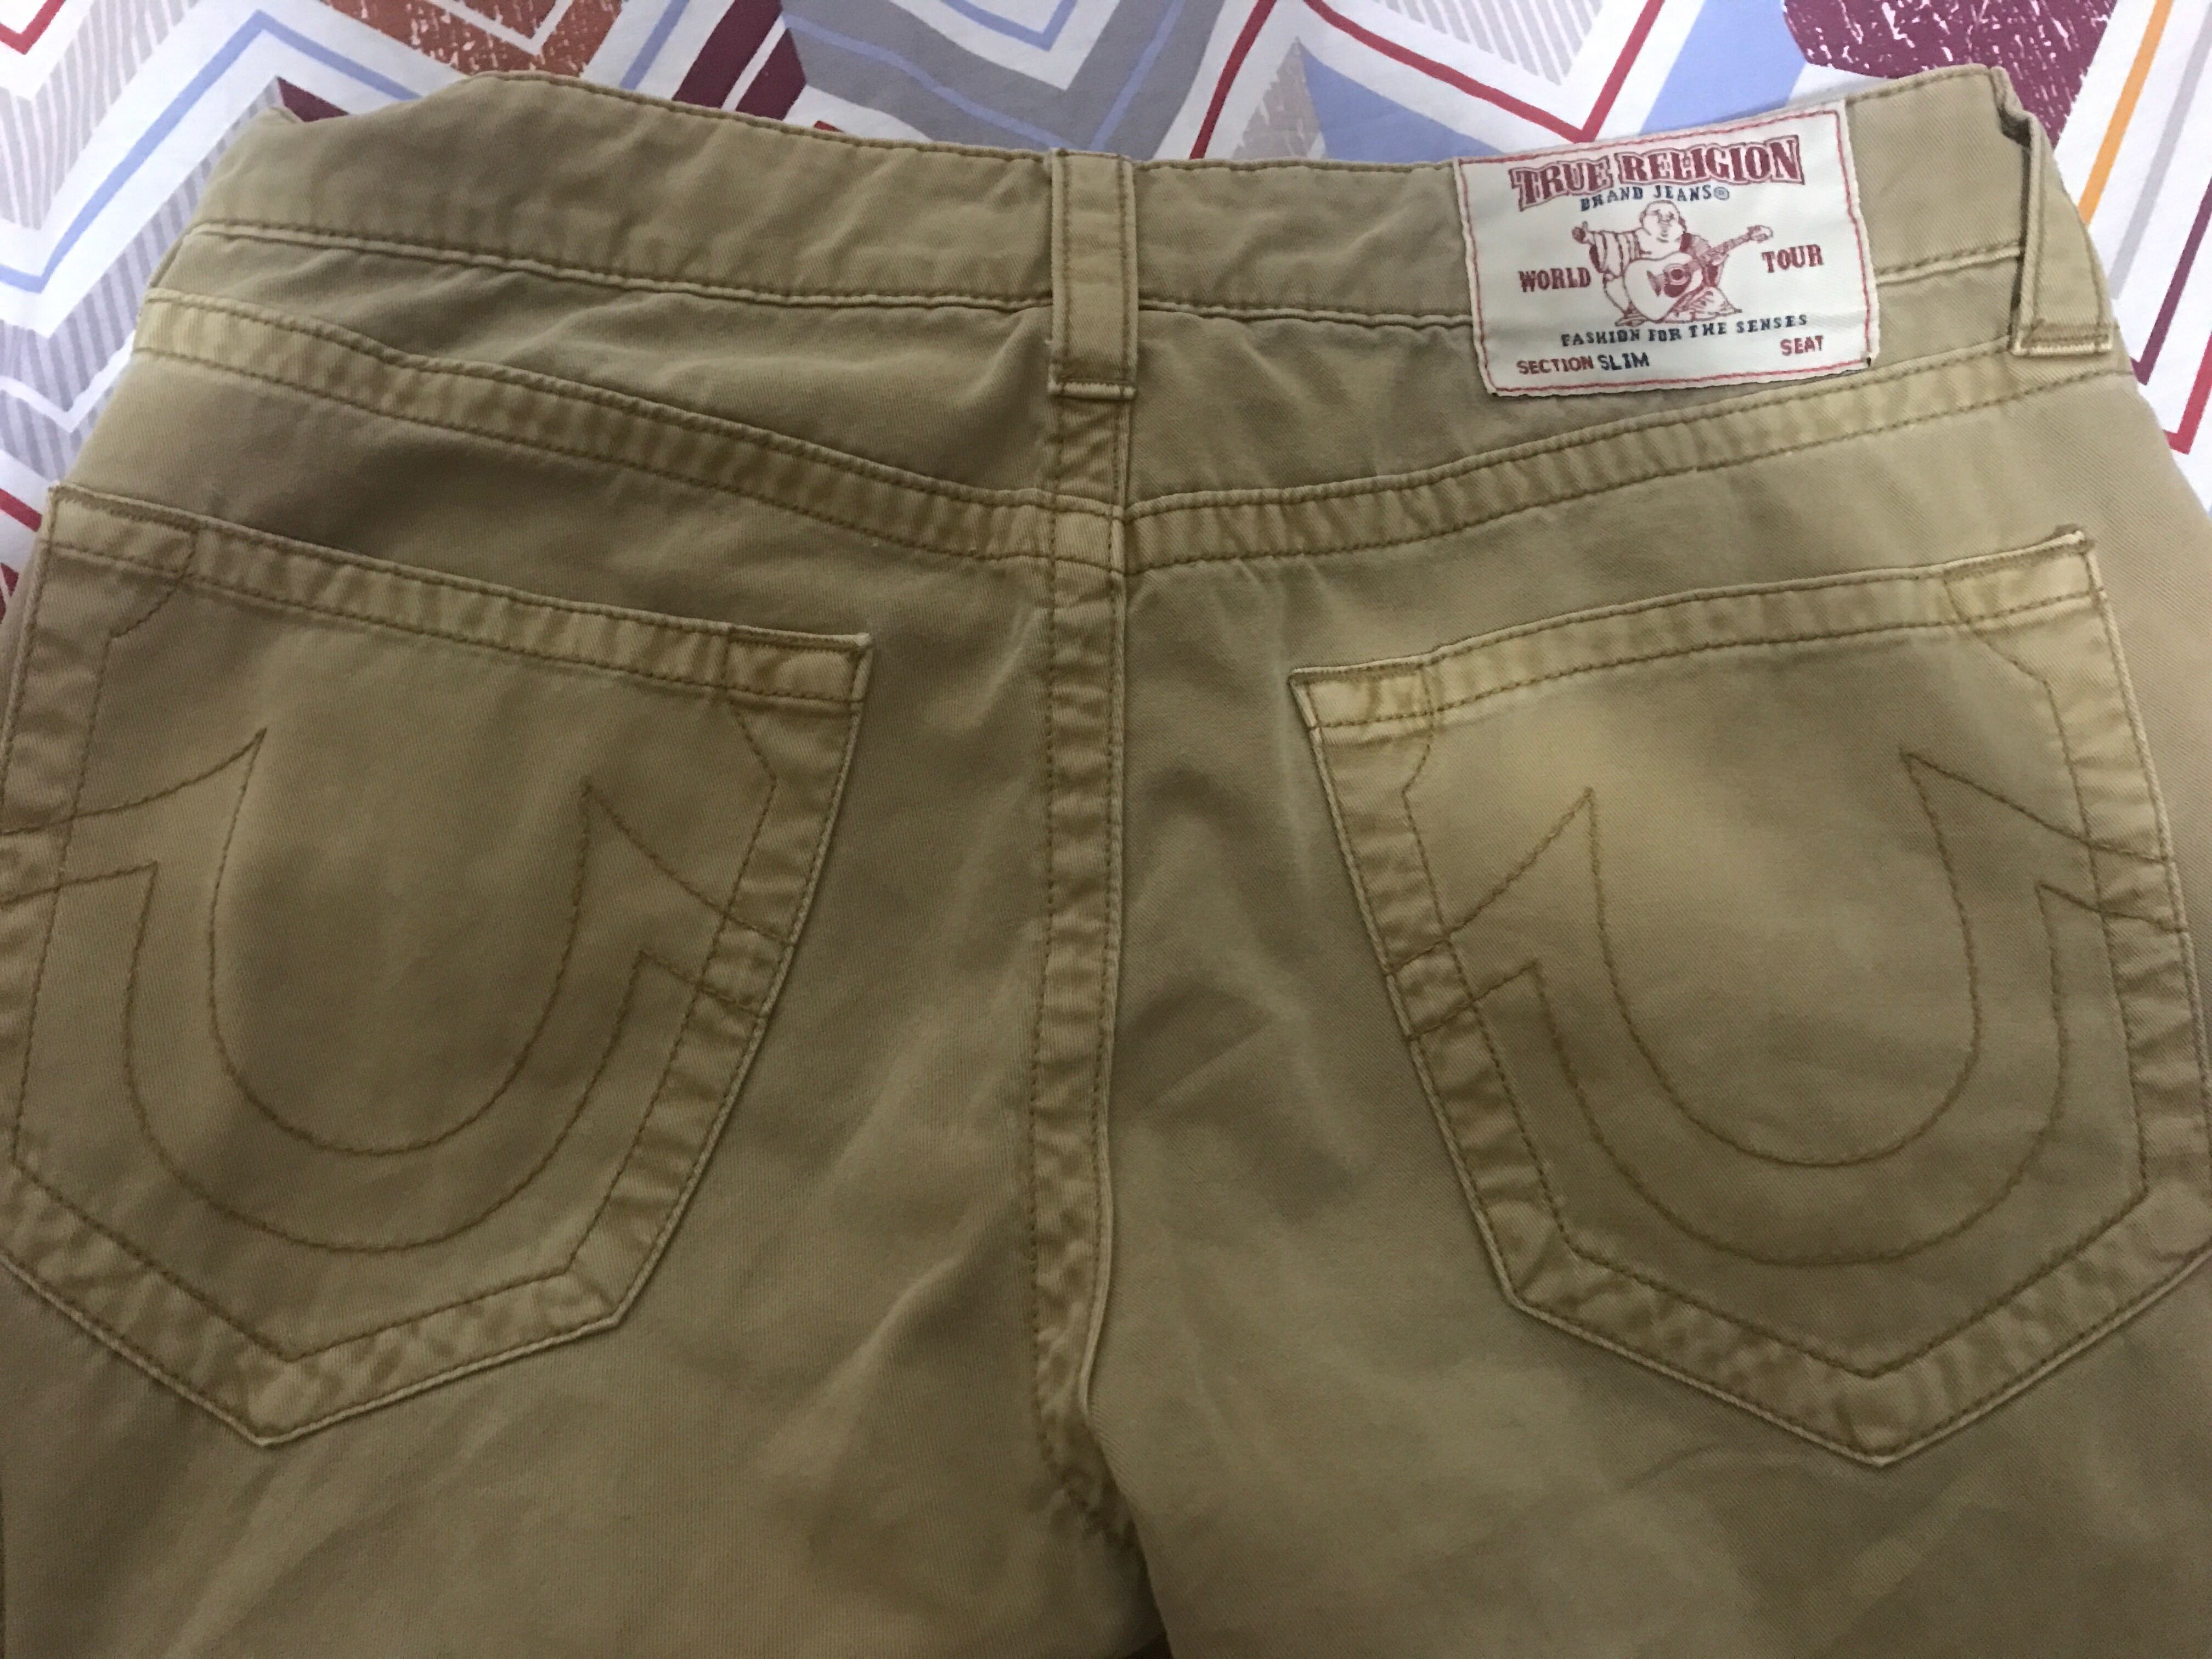 true religion khaki shorts